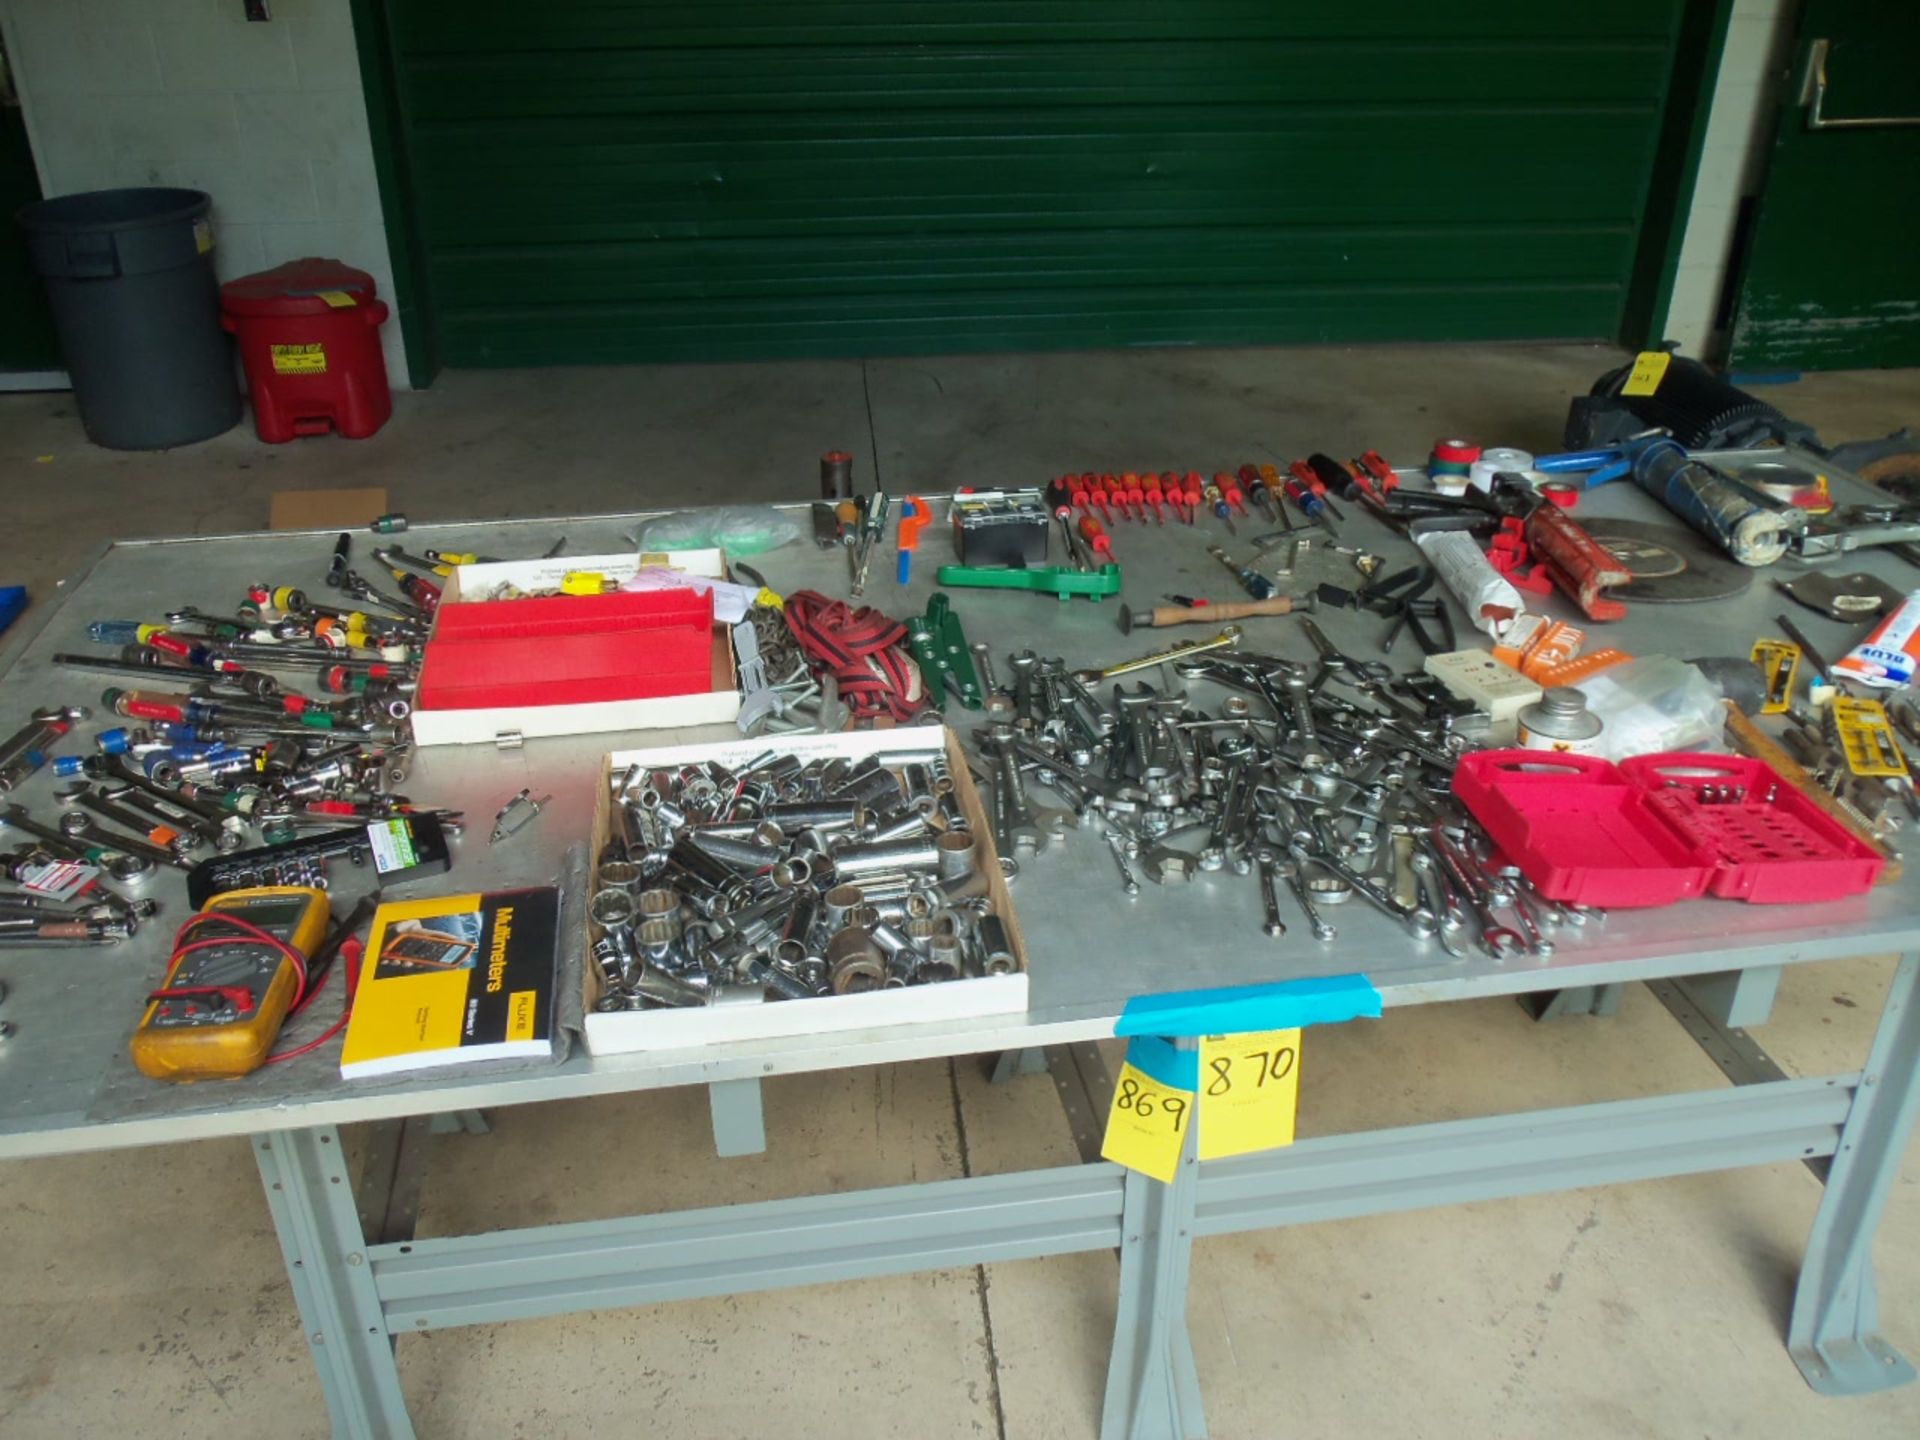 Misc. mechanics tools, wrenches, sockets, screwdrivers